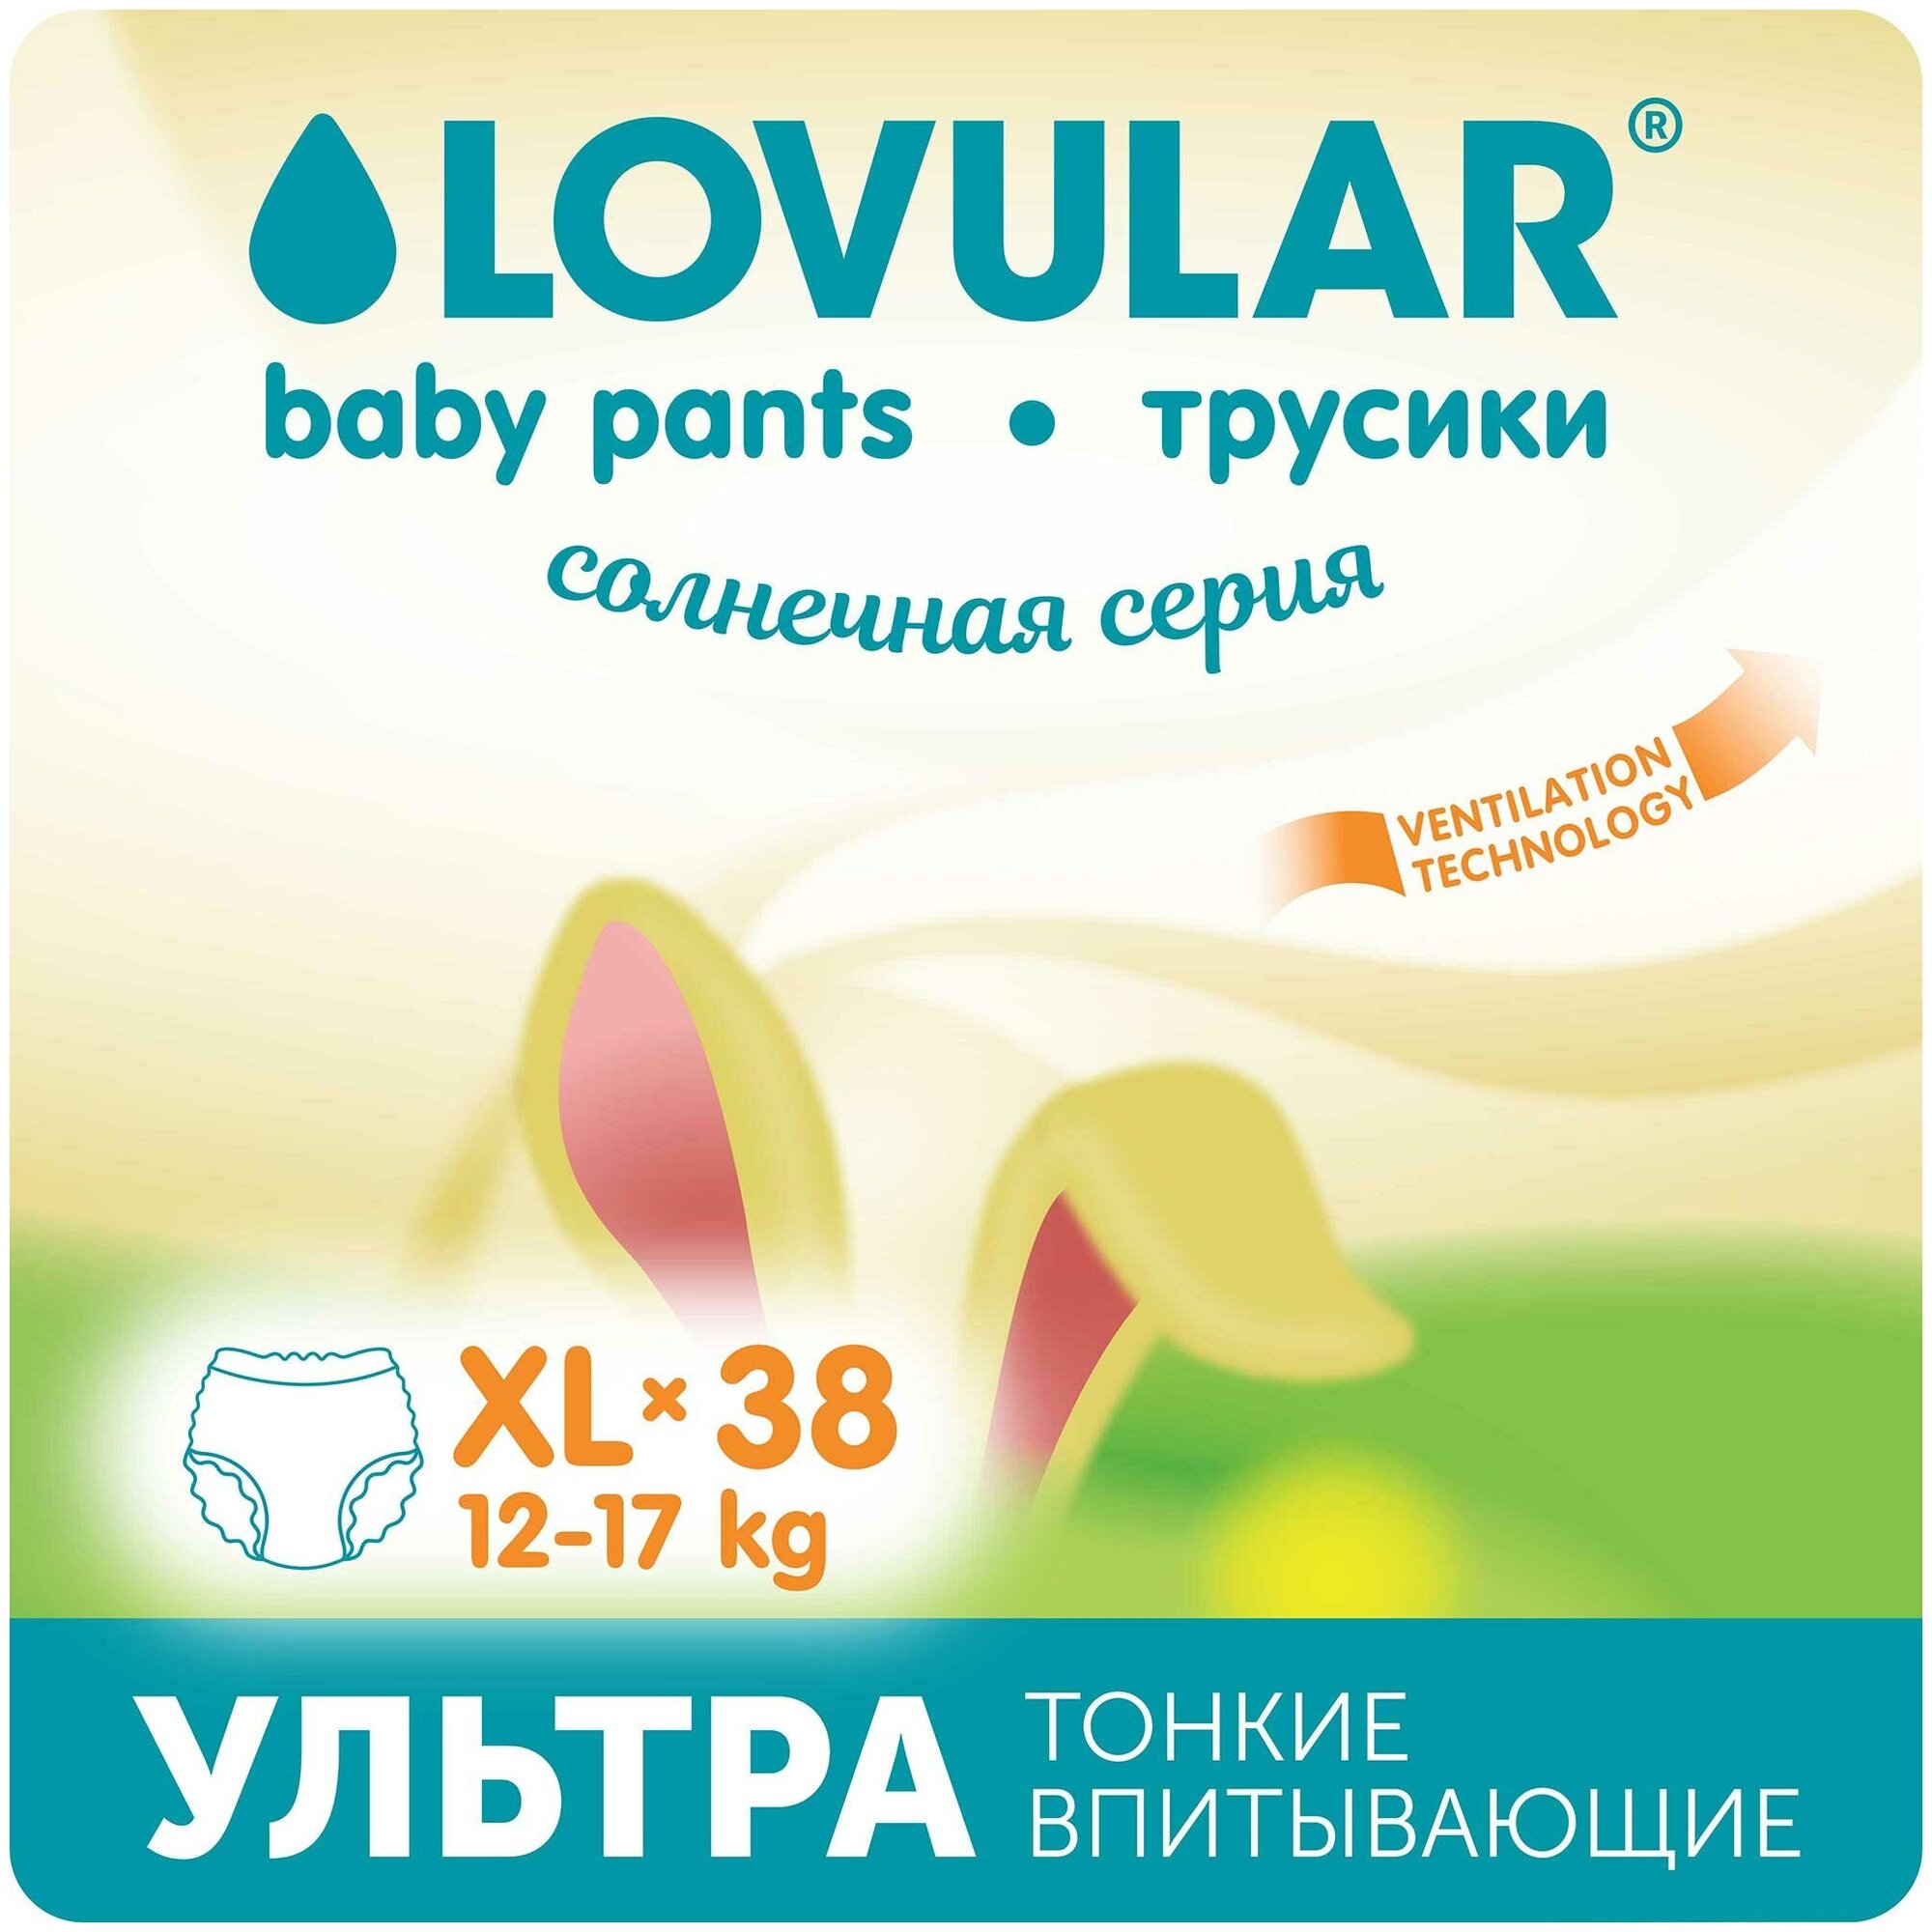 Трусики-подгузники lovular солнечная серия xl 12-17кг, 38 шт/уп LOVULAR Limited - фото №2